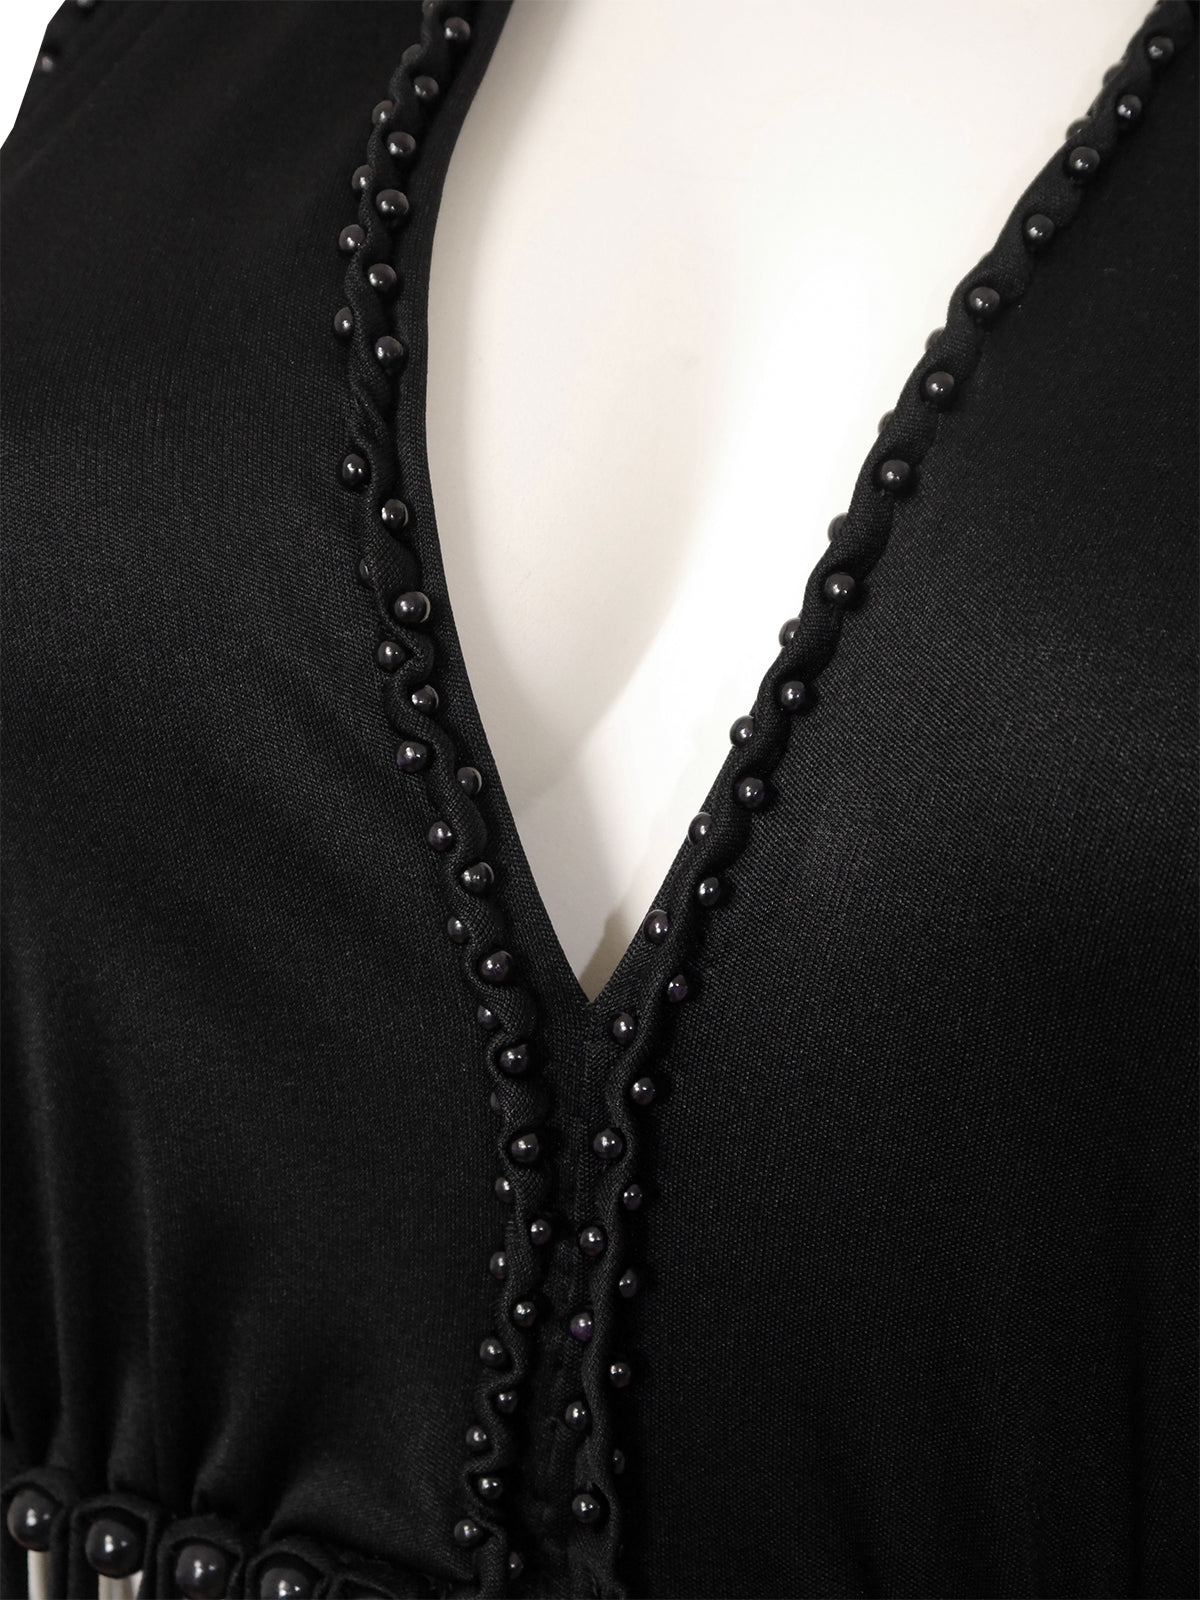 LORIS AZZARO 1970s Vintage Beaded Backless Black Jersey Maxi Evening Dress